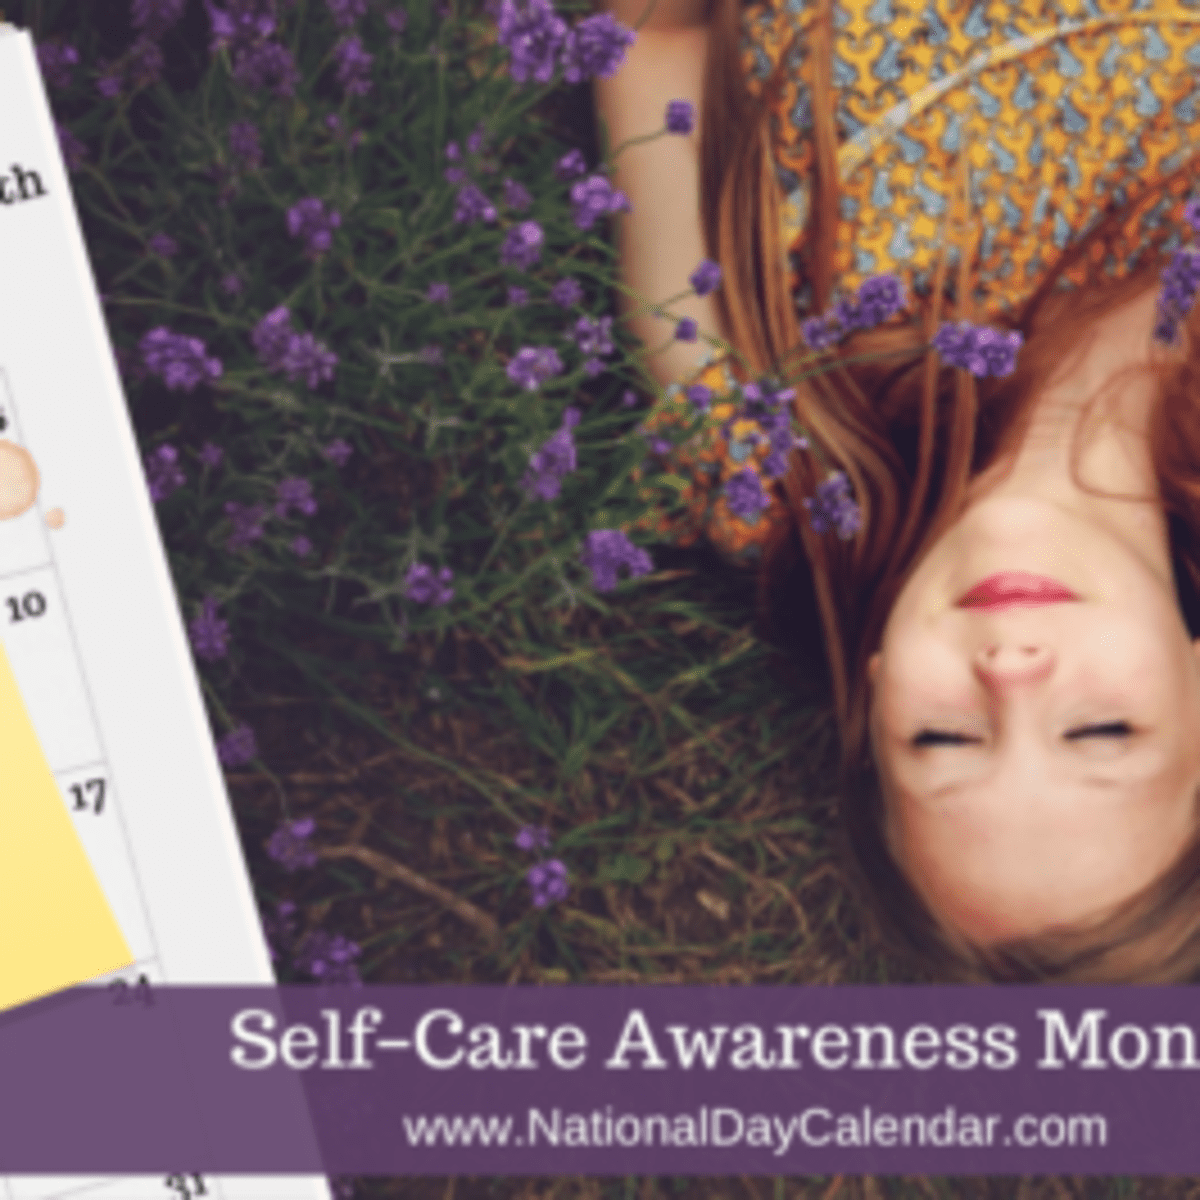 Hey SuperNovas! September is Self-Care Awareness Month & we're